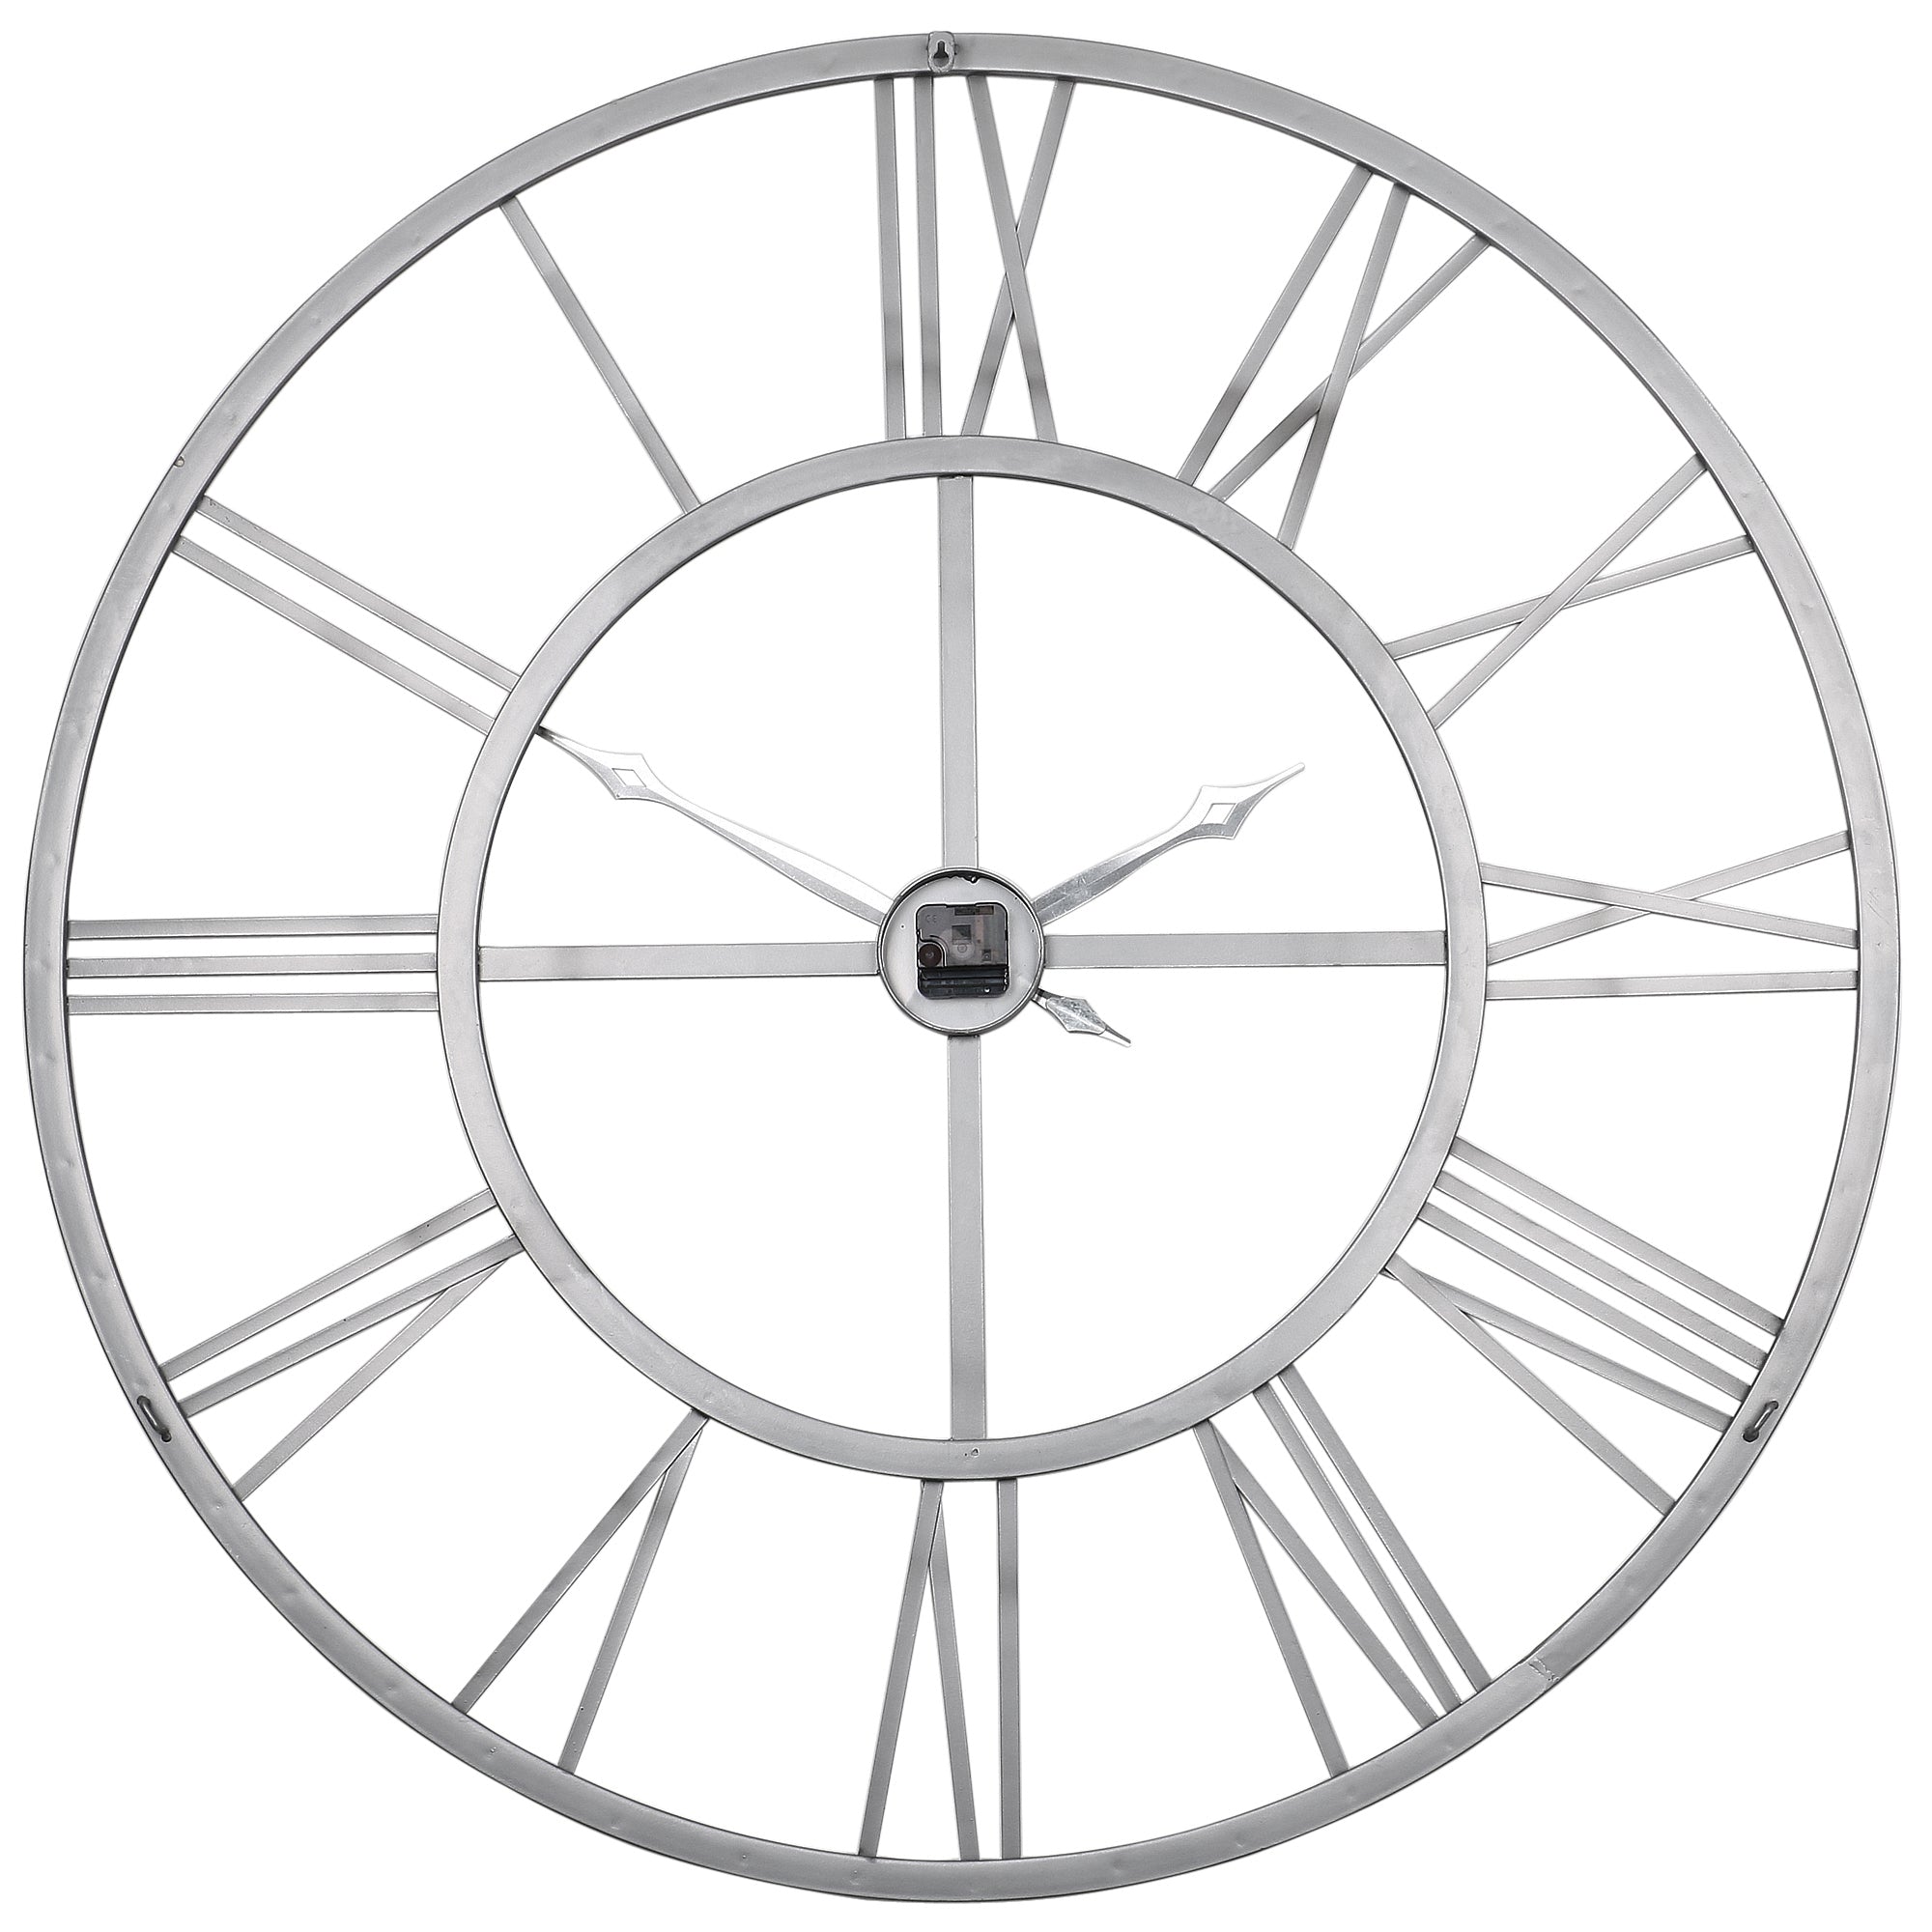 Loft97 CL25GY Rivet Roman Industrial Oversize Wall Clock, Gray, 45